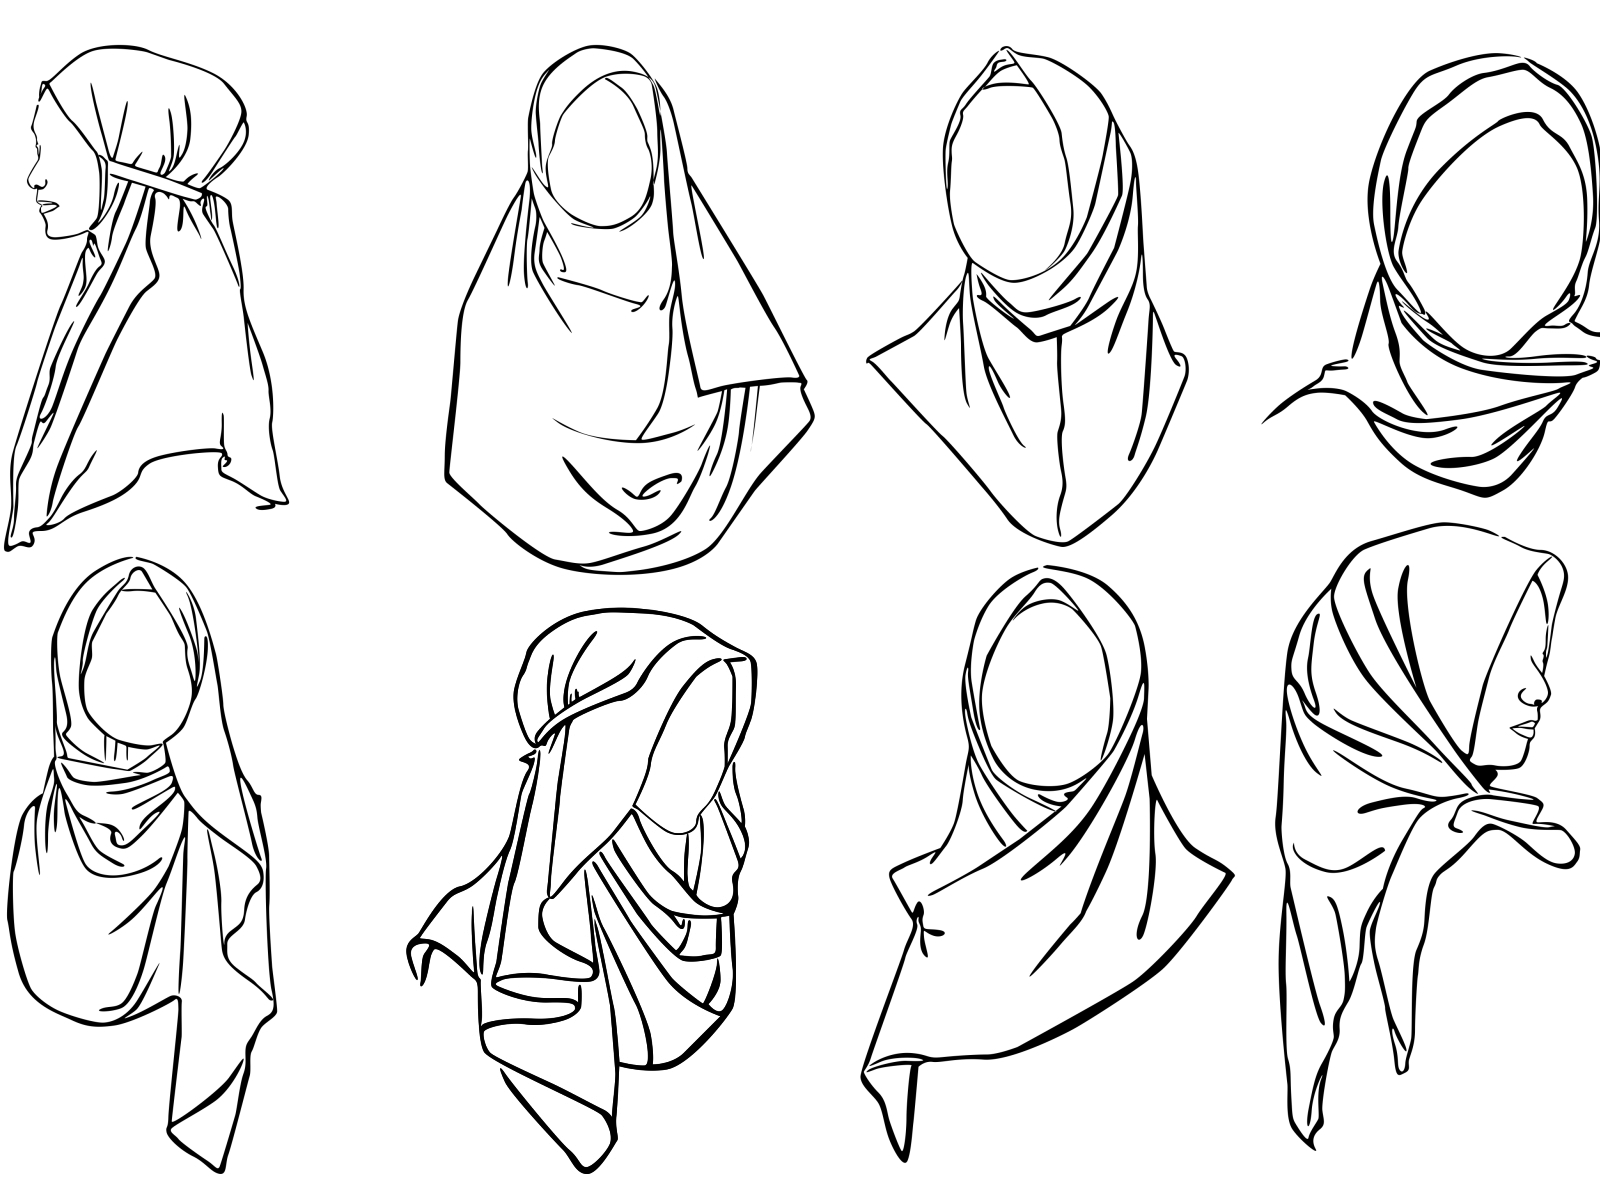 Hijab Woman with Line Art style by Arief sapta adjie on Dribbble